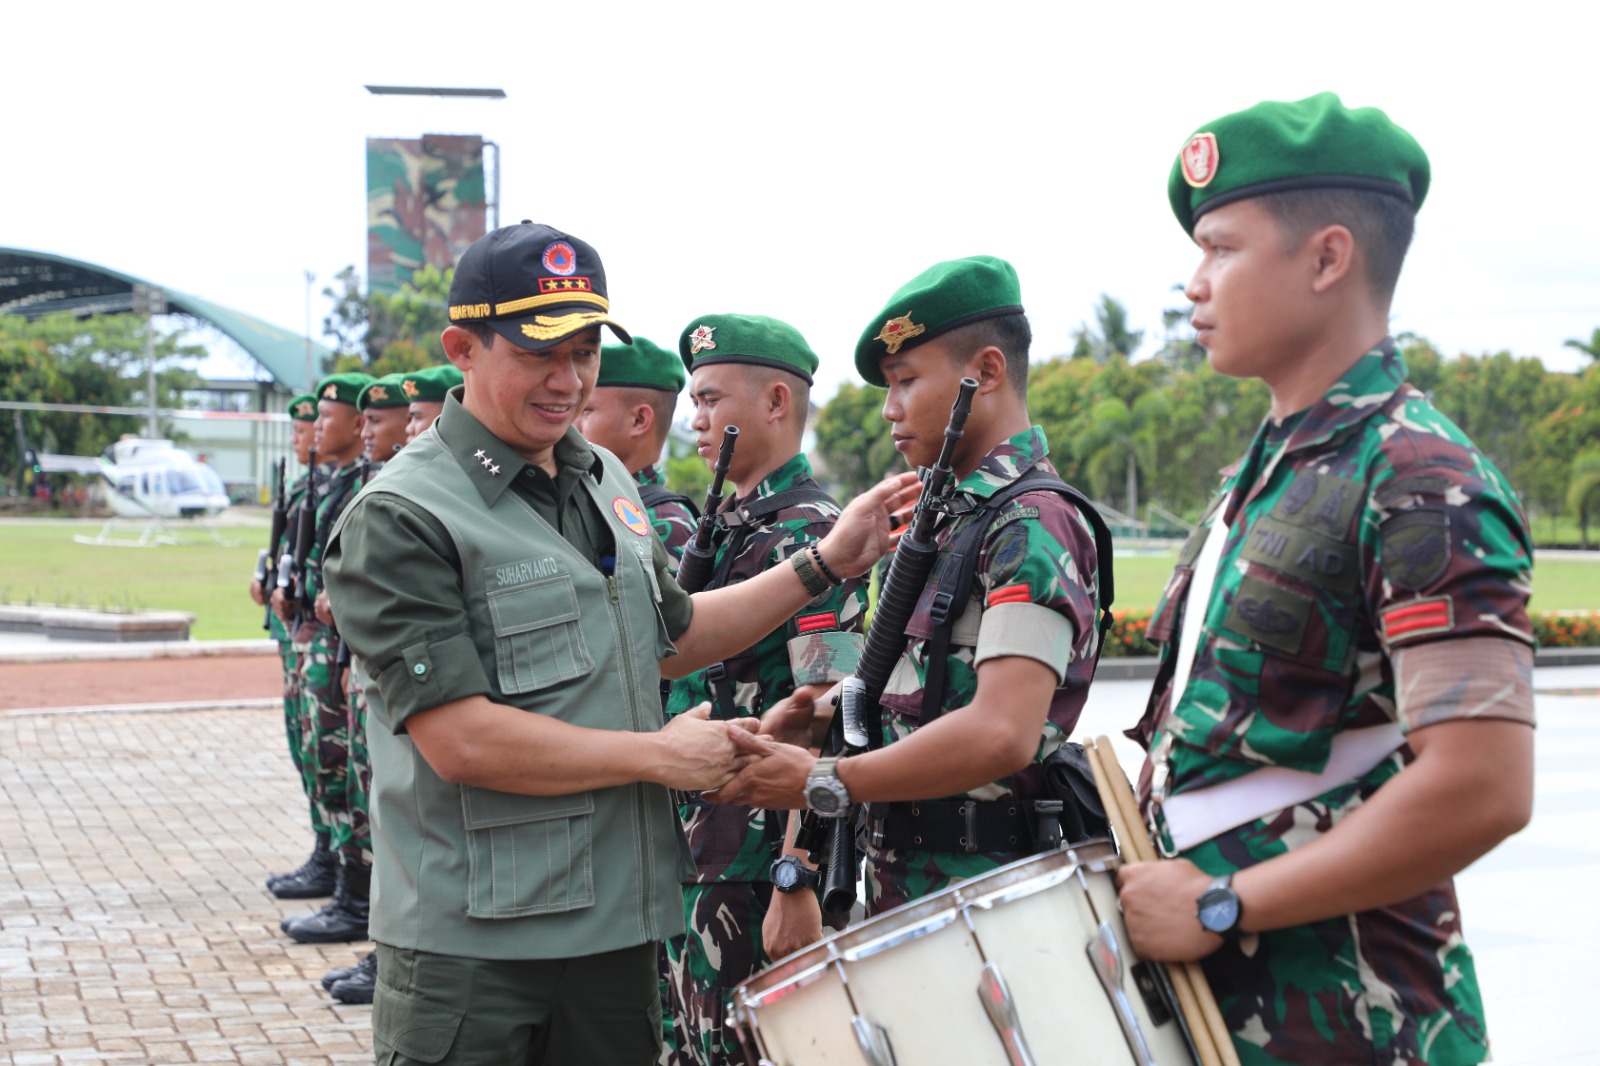 Kepala BNPB Letjen TNI Suharyanto, S.Sos., M.M (kiri dengan rompi hijau dan topi hitam) berjabat tangan dengan personel TNI Angkatan Darat di Kodam XII/Tanjungpura, Kalimantan Barat, Rabu (20/9).